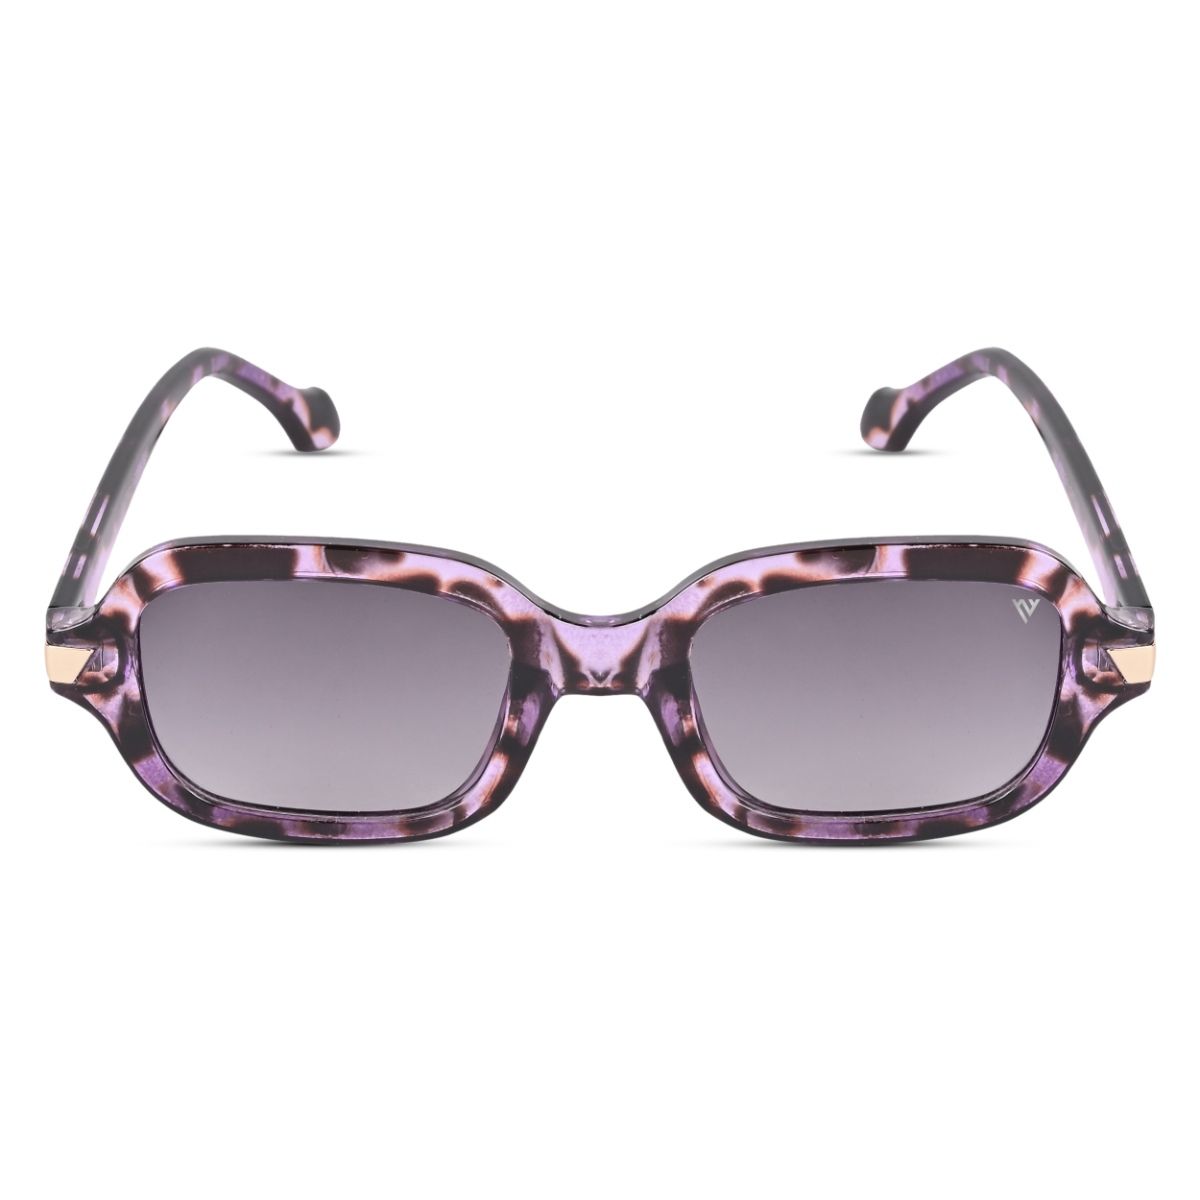 Buy Voyage Grey Wayfarer Sunglasses for Men & Women - 2837Mg3869 (51) Online